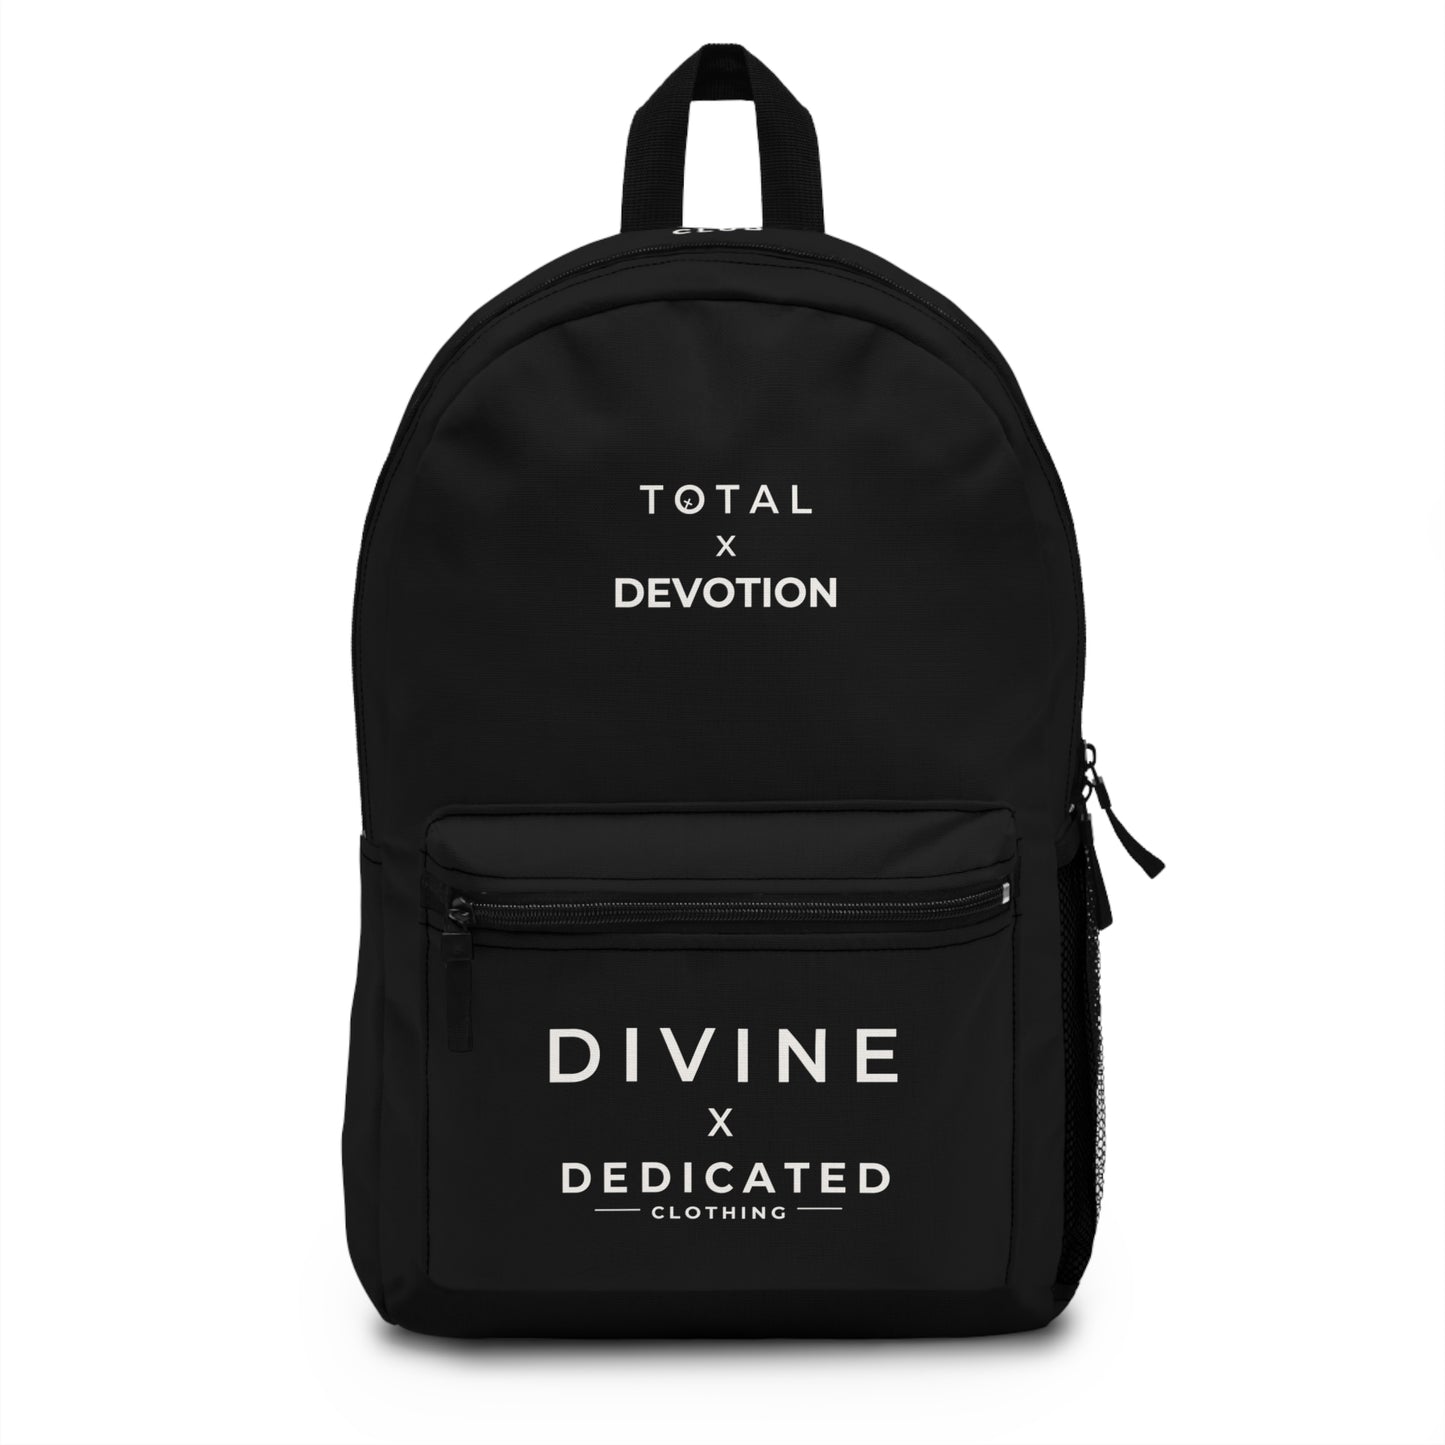 Divine Dedicated Clothing Backpack